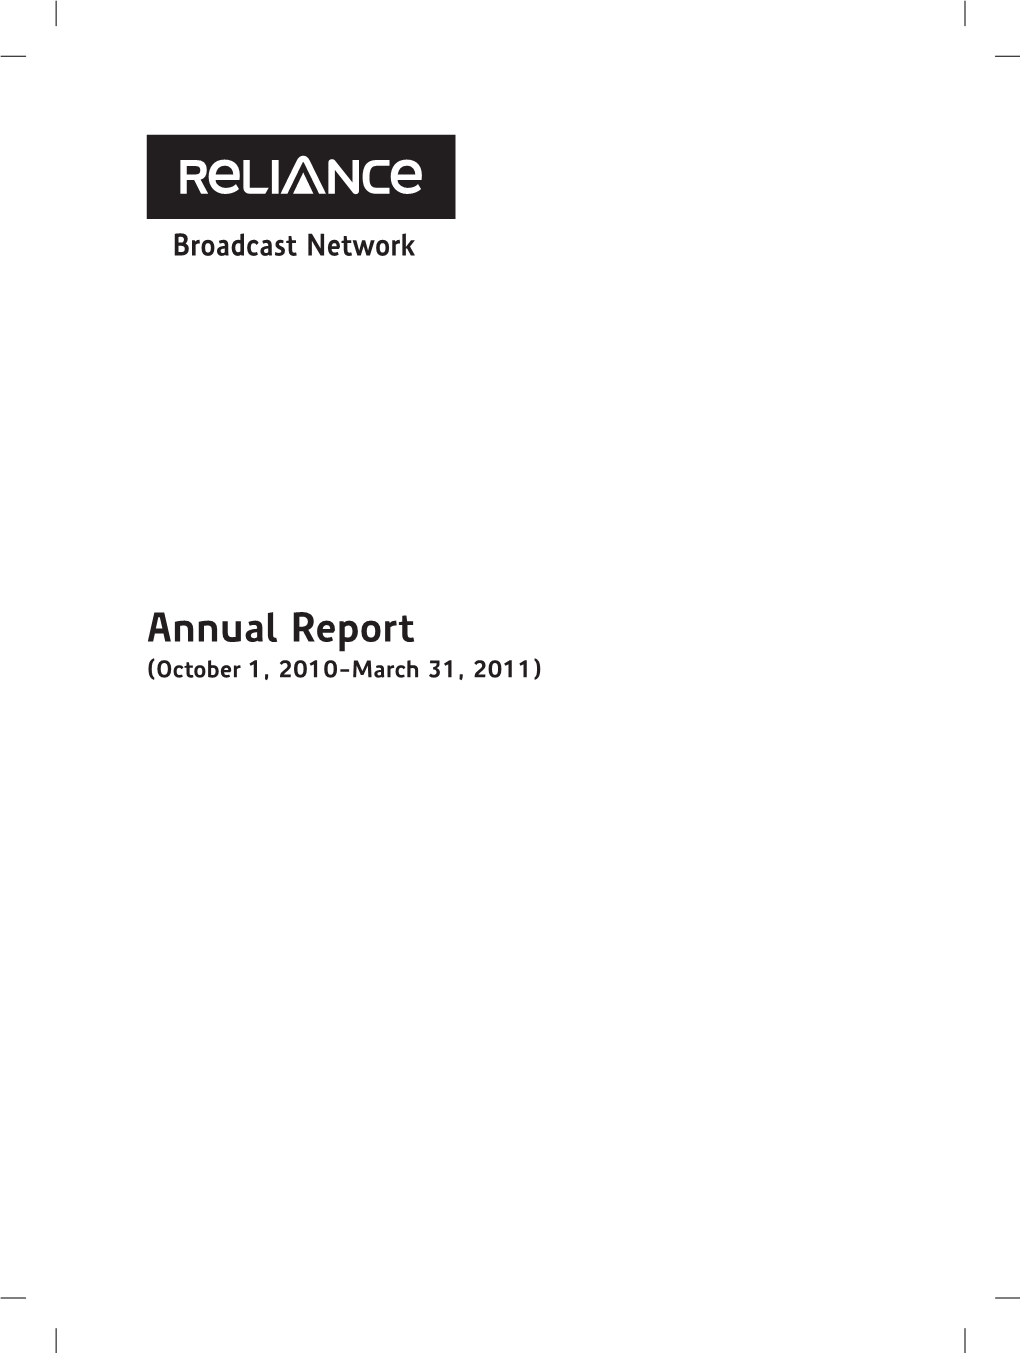 Annual Report (October 1, 2010-March 31, 2011) Dhirubhai H